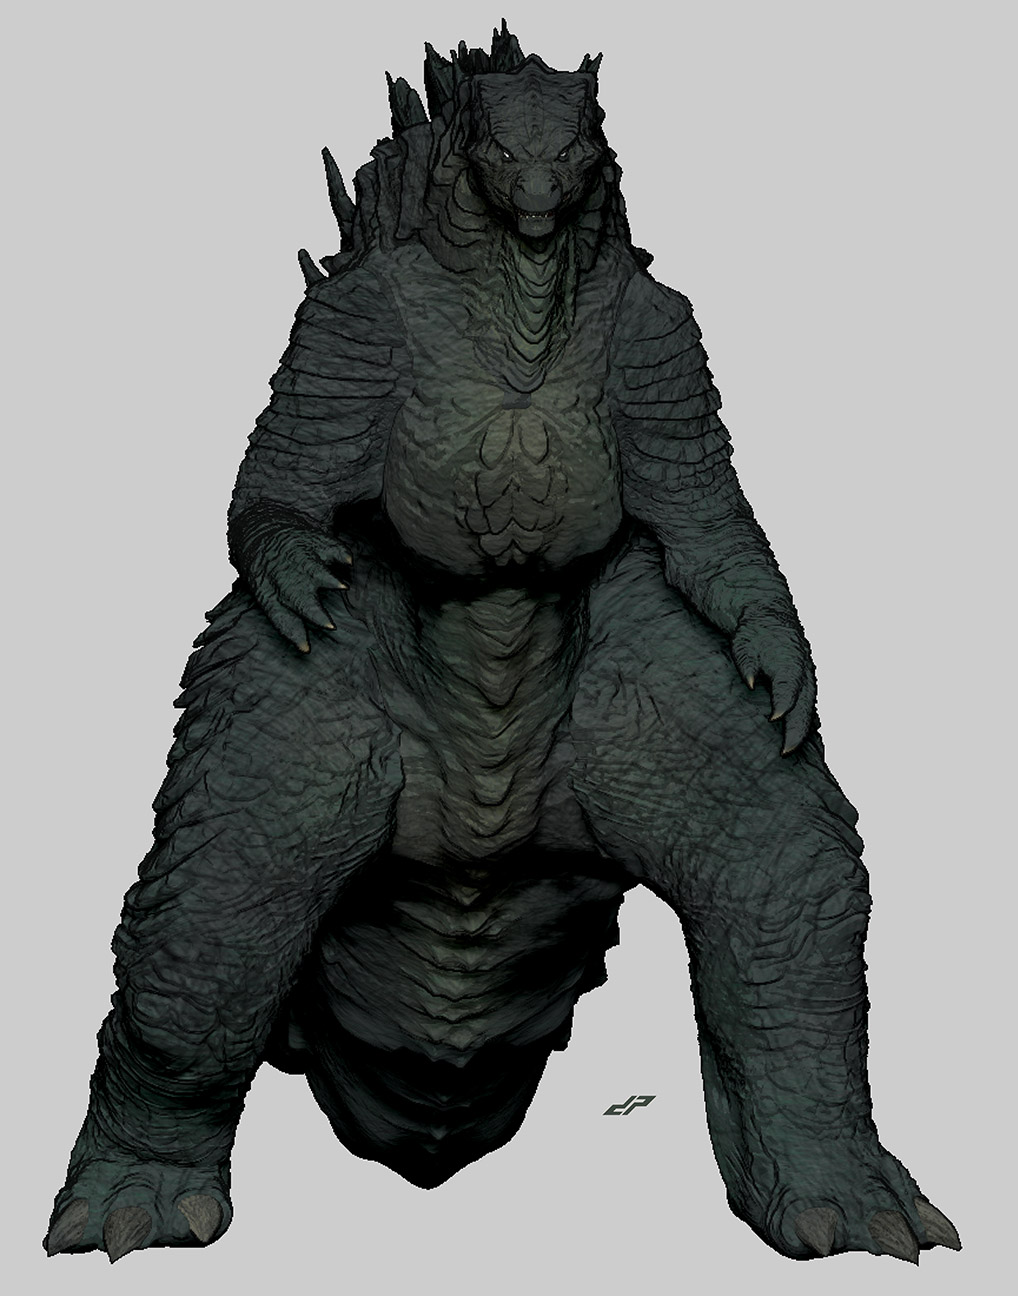 Godzilla_wip_1